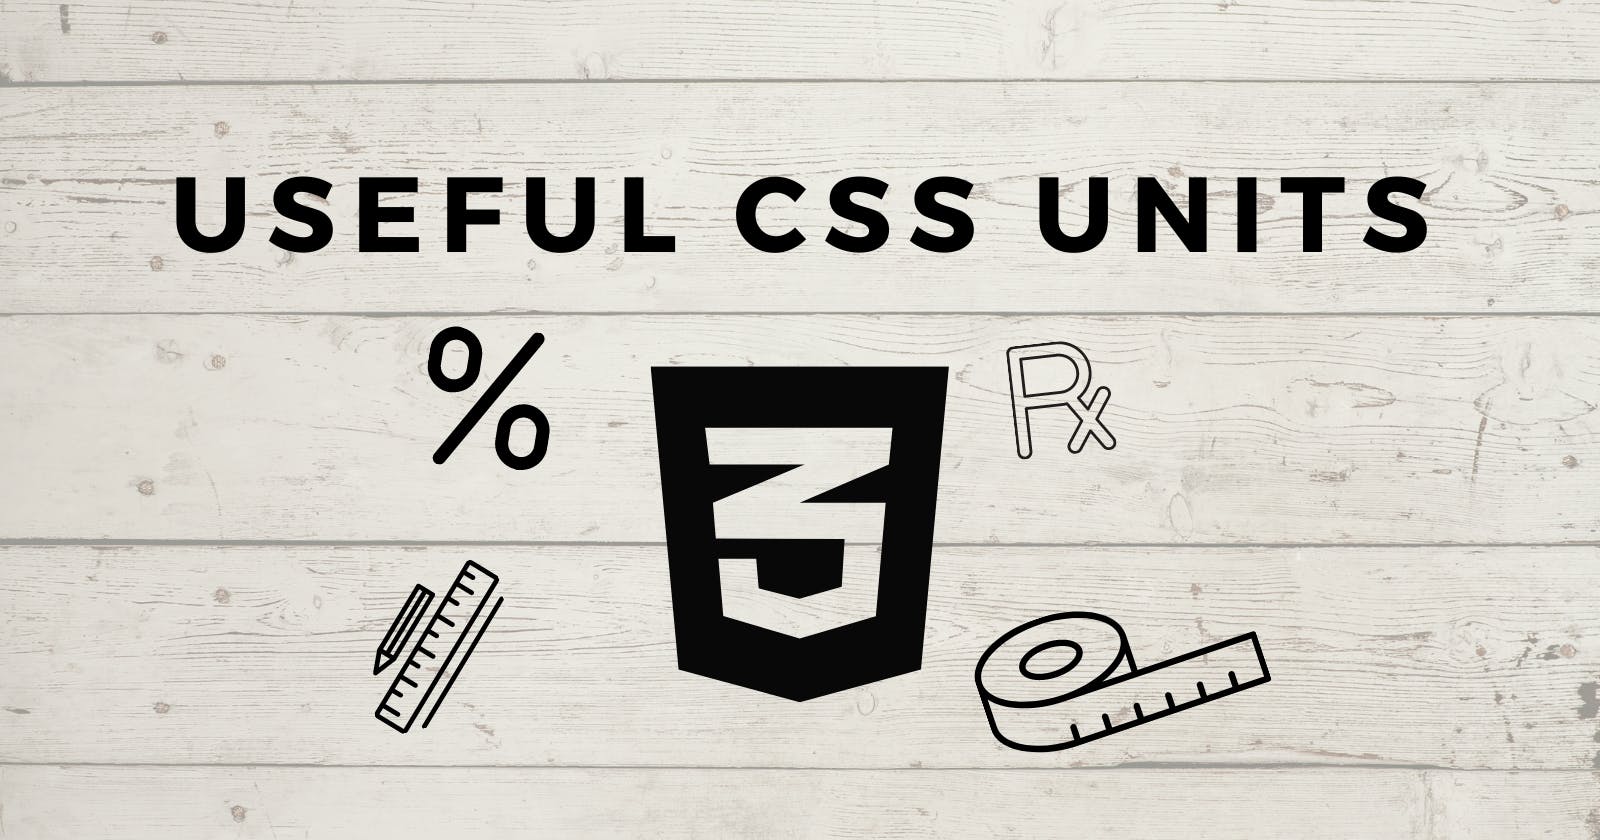 Useful CSS units